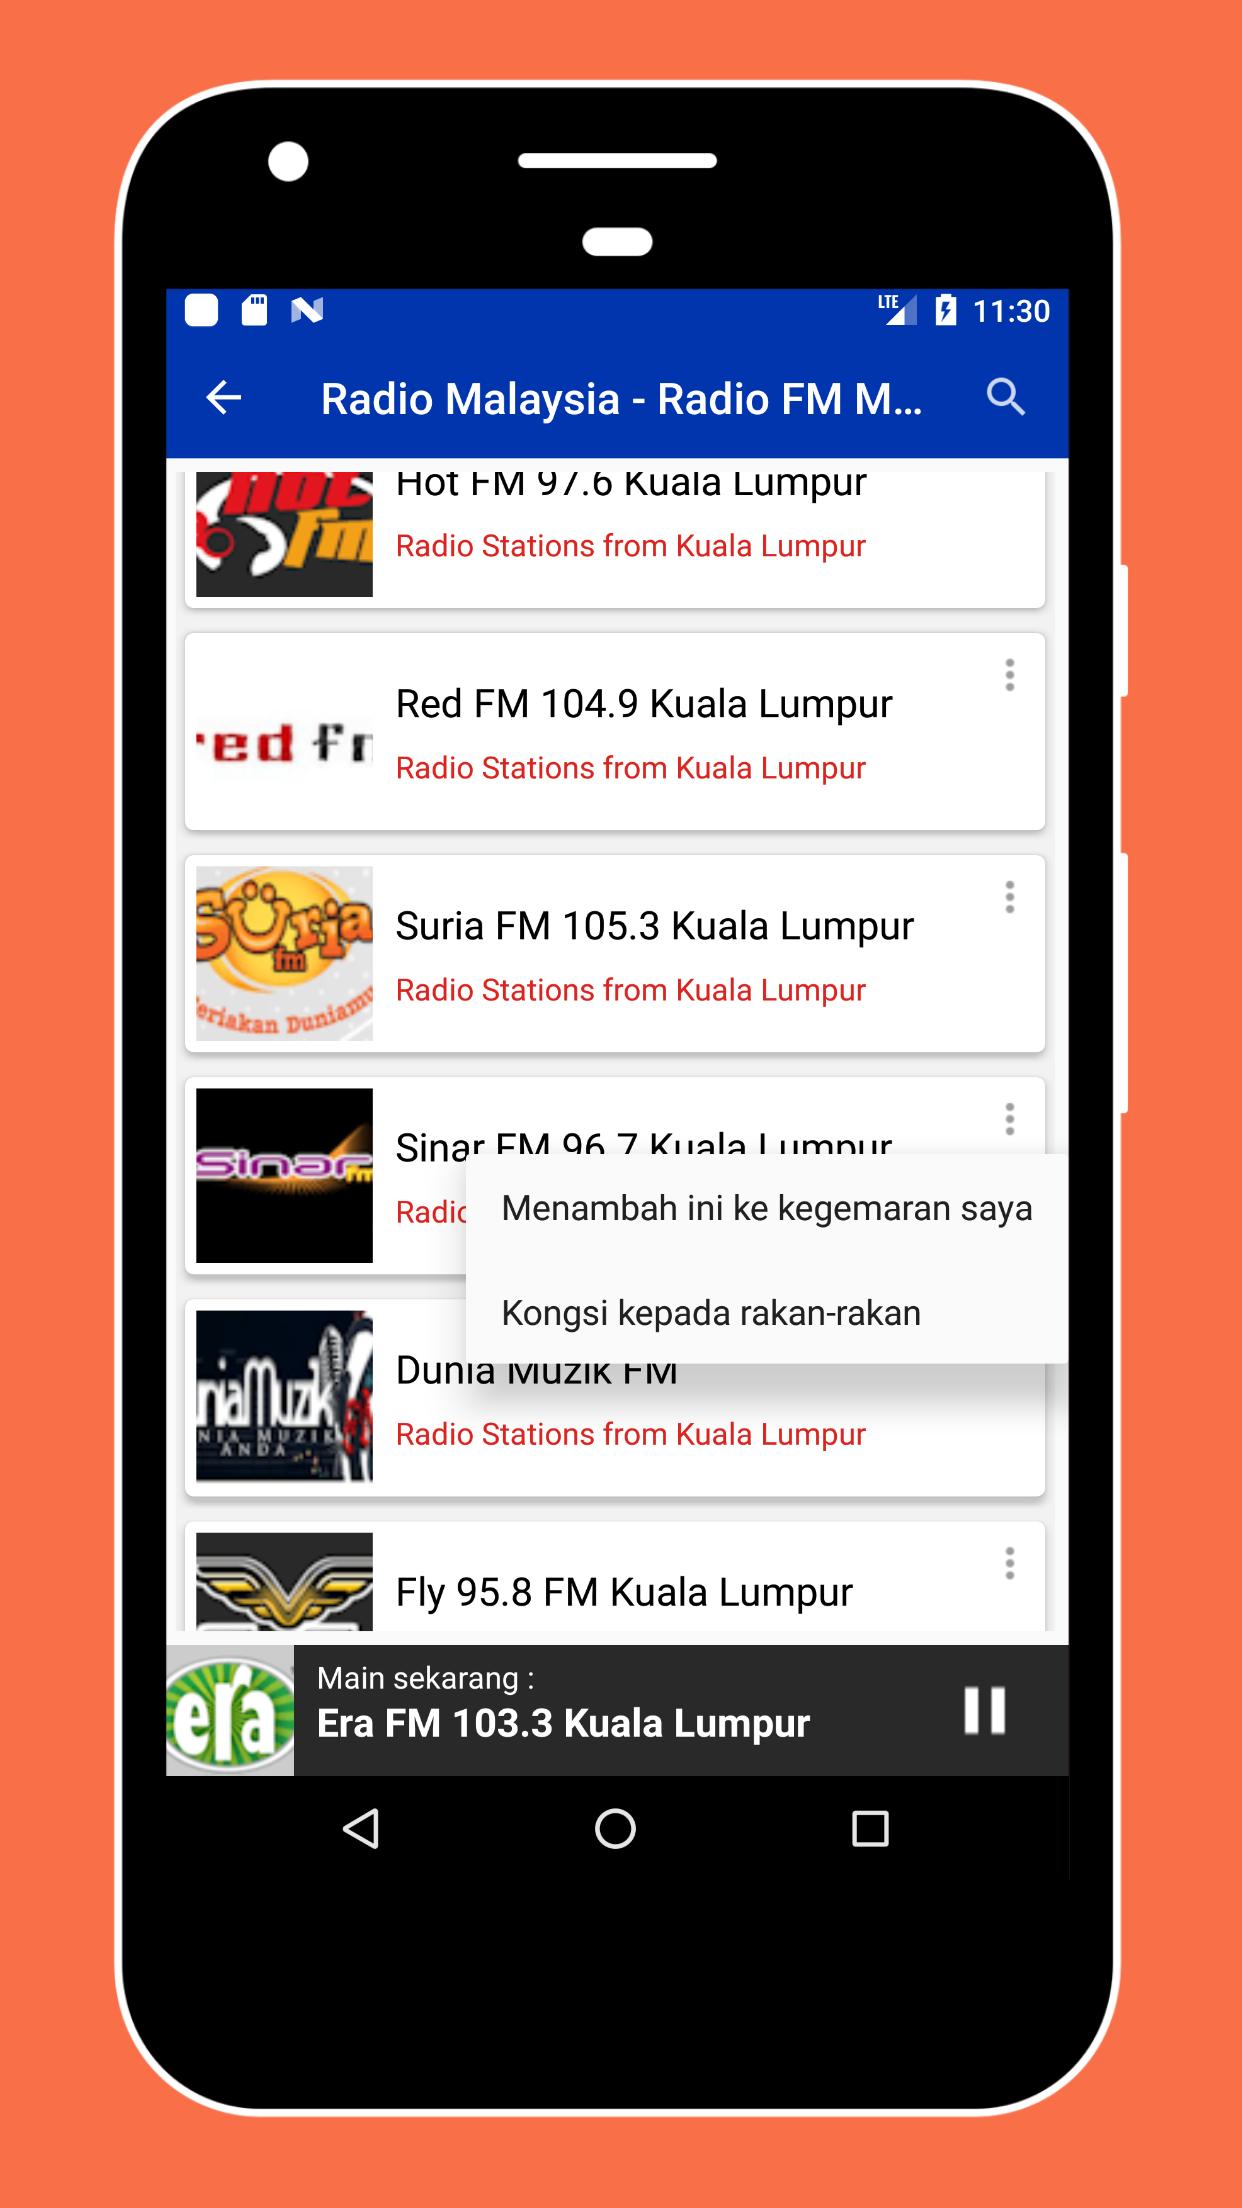 Radio Malaysia - Radio FM Malaysia - Online Radios for ...